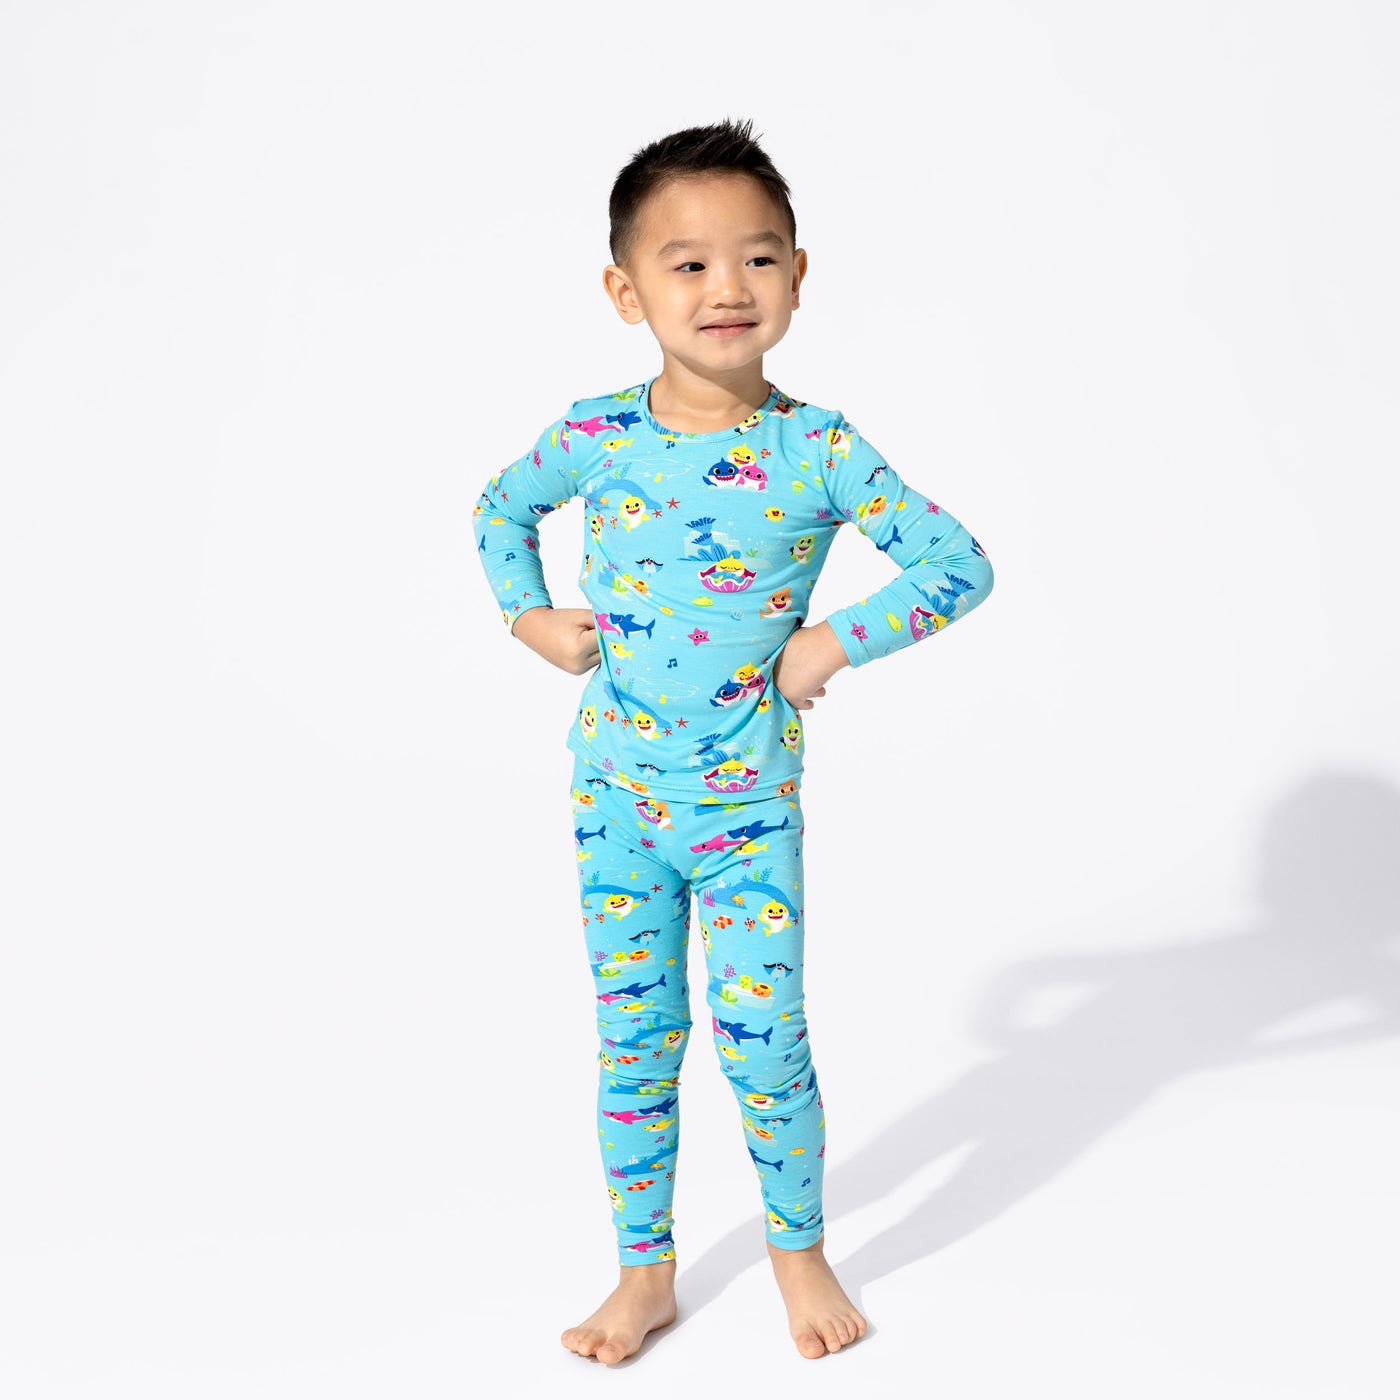 Baby Shark Bamboo Kids Pajamas